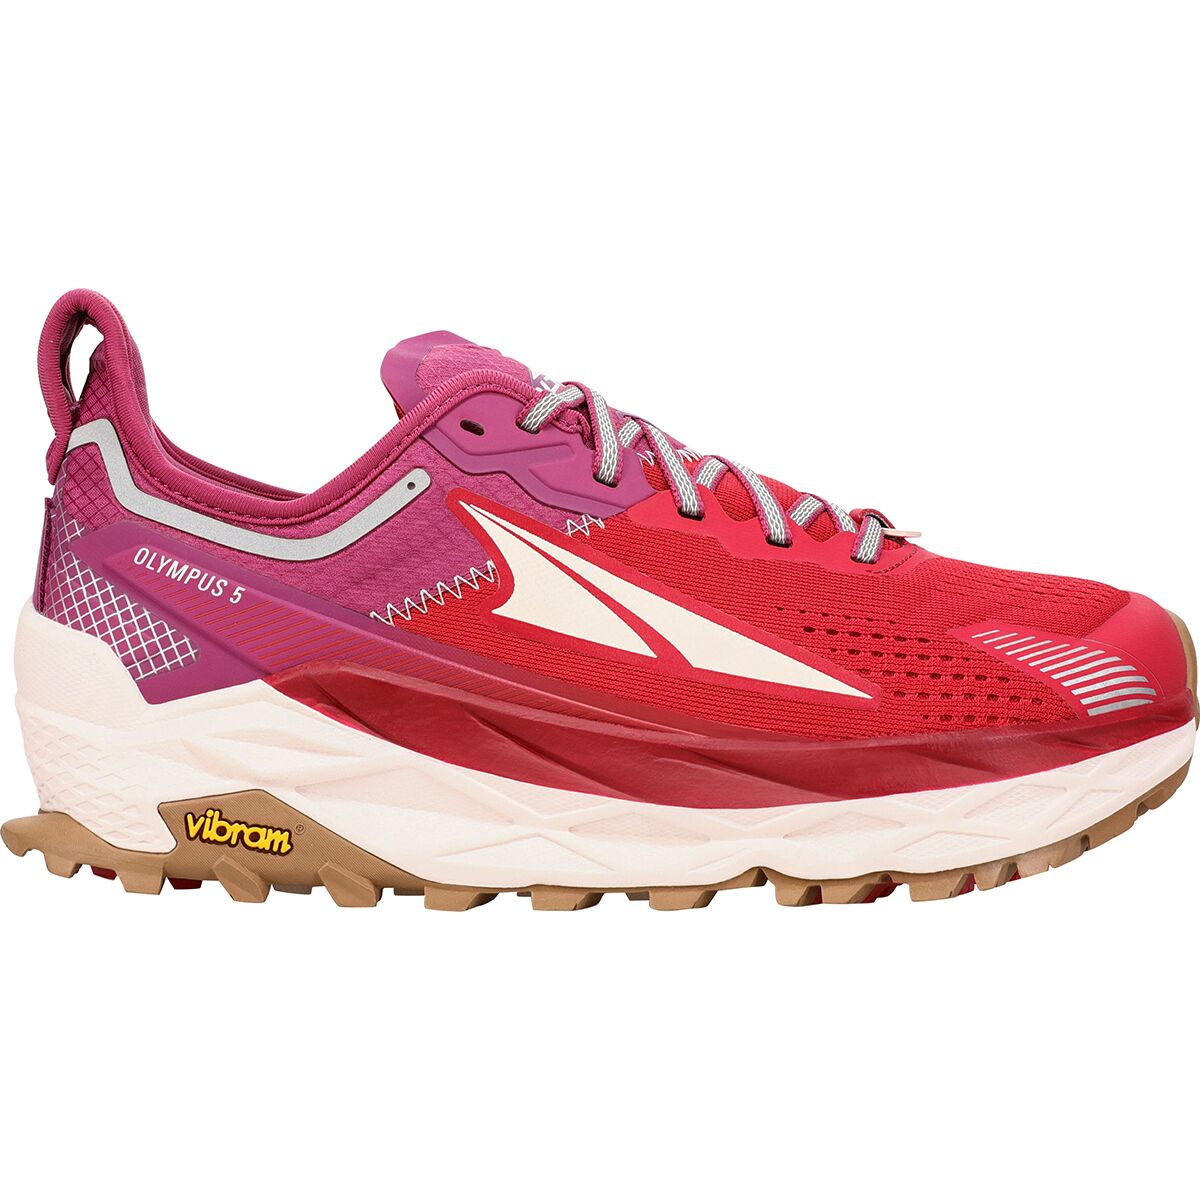 Altra Olympus 5.0 Trail Running Shoe - Women's